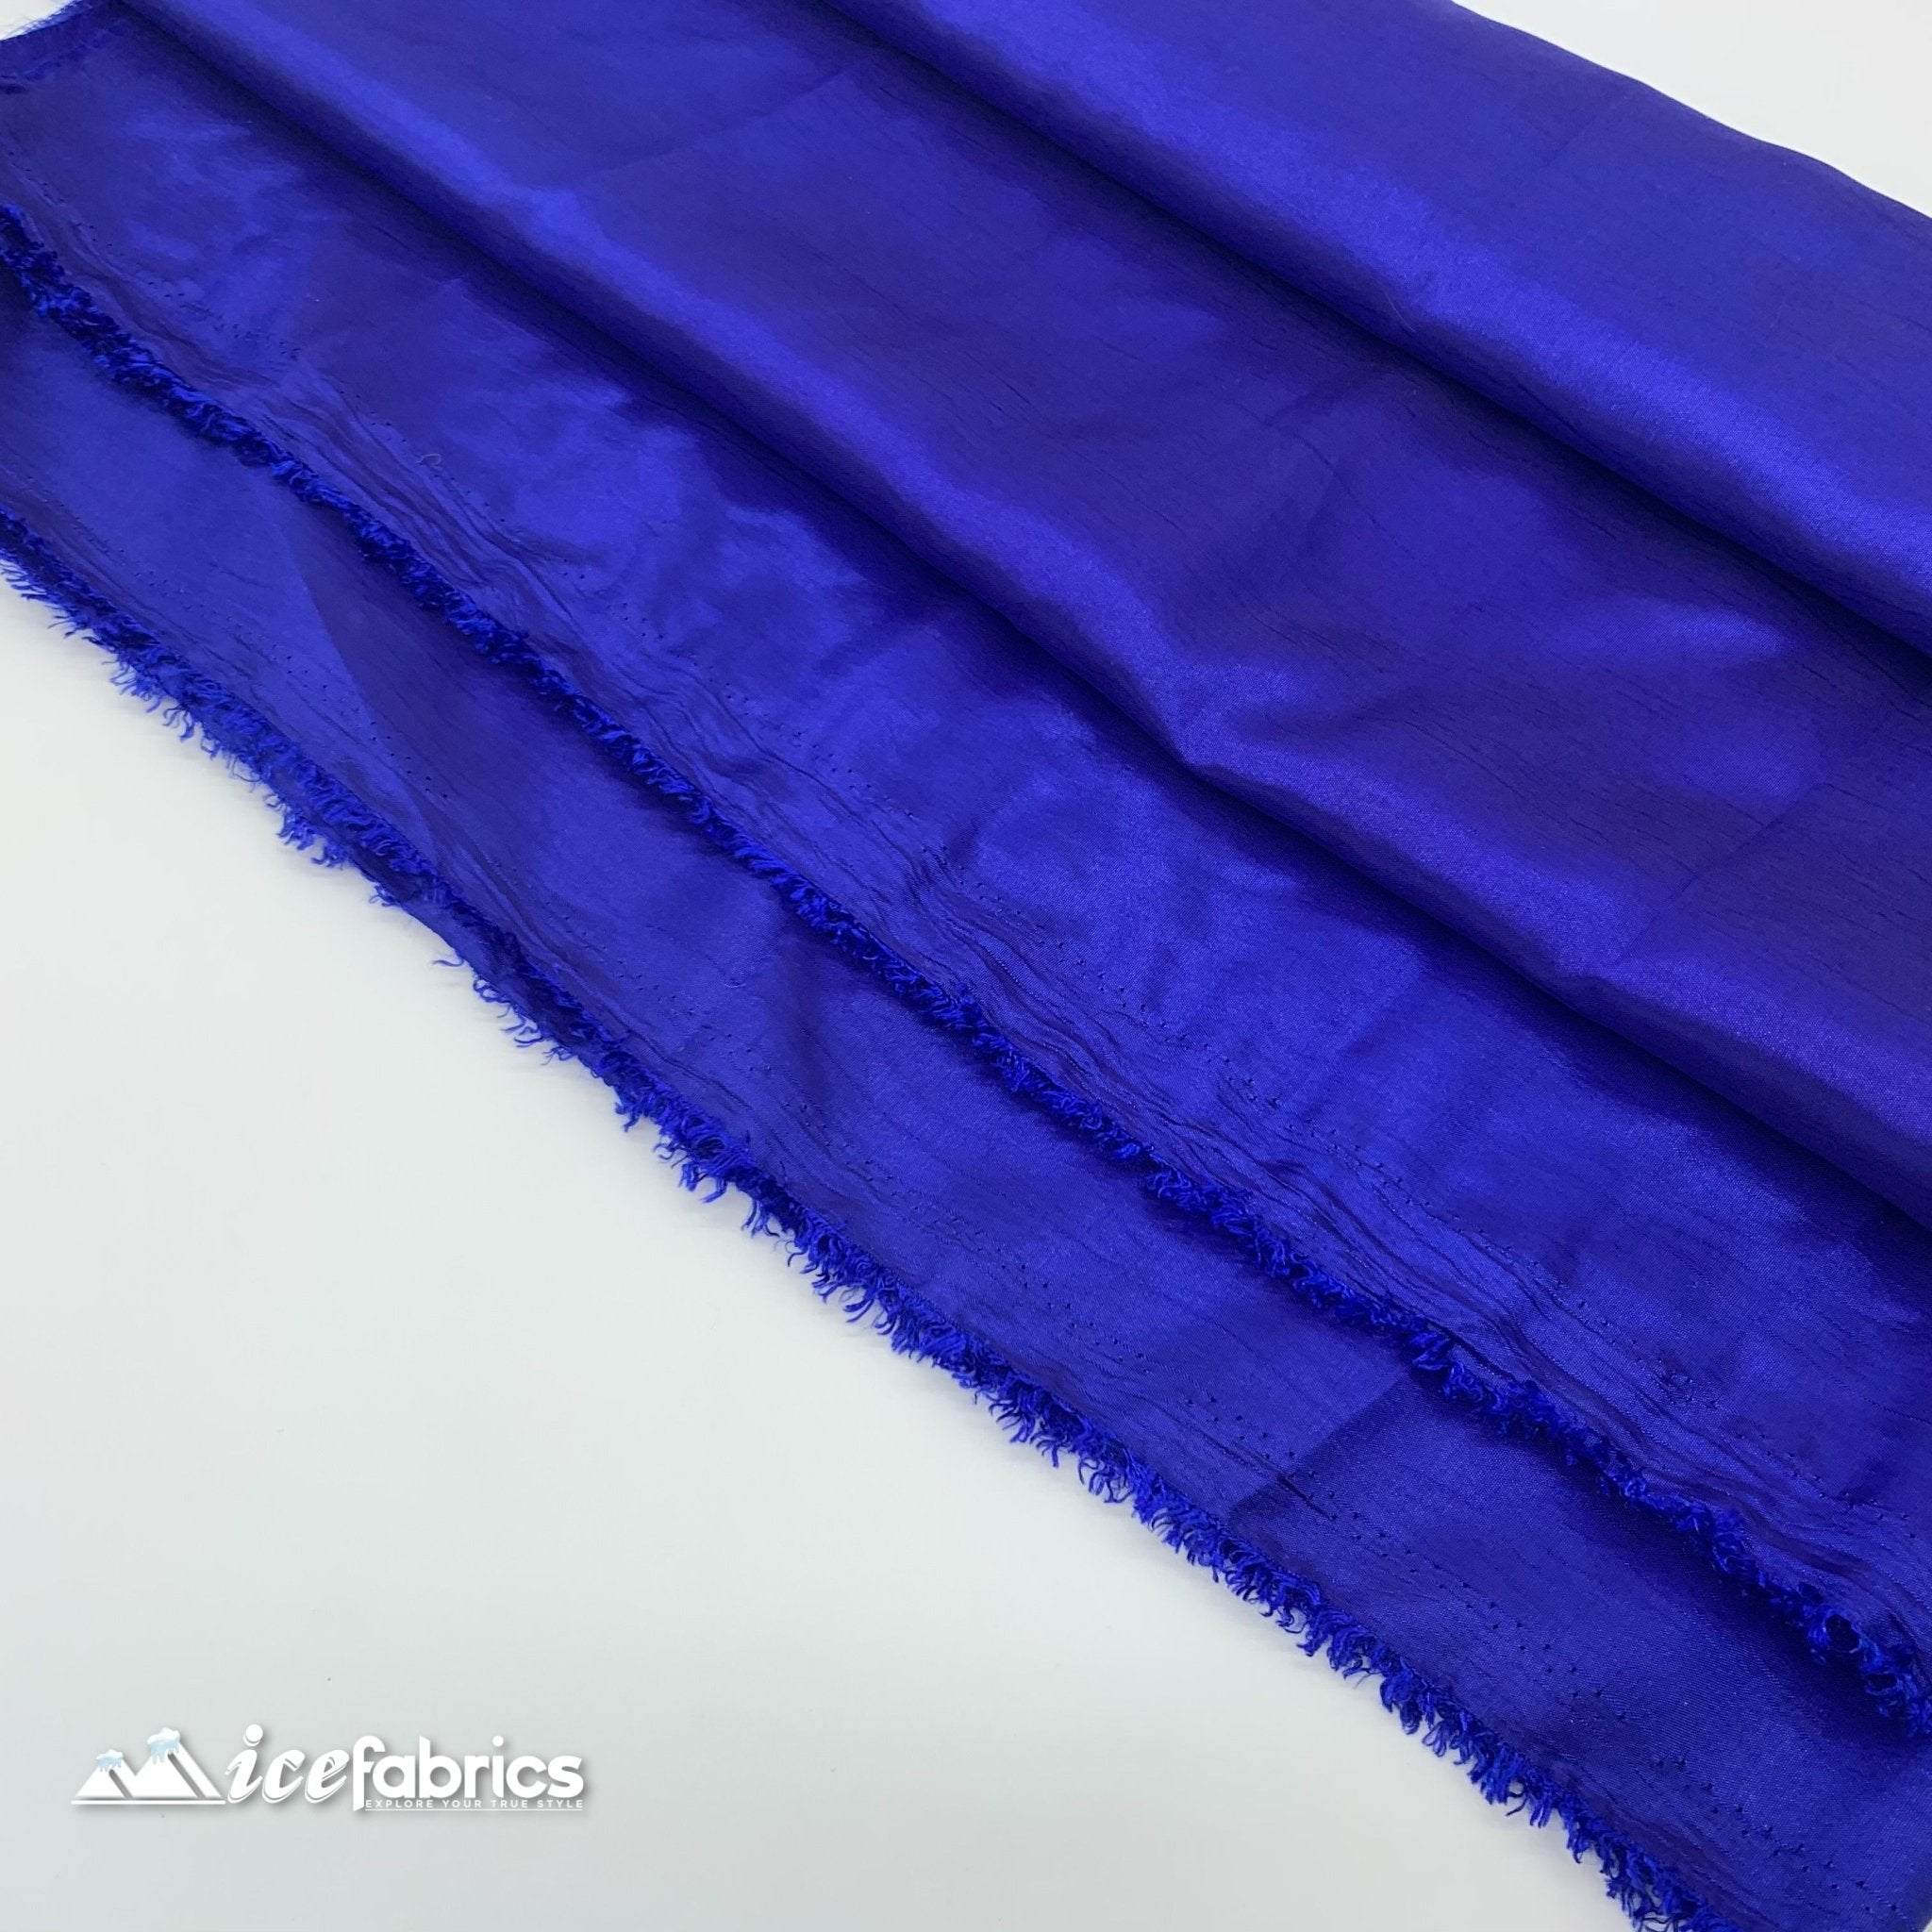 Royal Blue Luxury Solid/ Taffeta Fabric / Fashion FabricTaffeta FabricICEFABRICICE FABRICSRoyal BlueRoyal Blue Luxury Solid/ Taffeta Fabric / Fashion Fabric ICEFABRIC